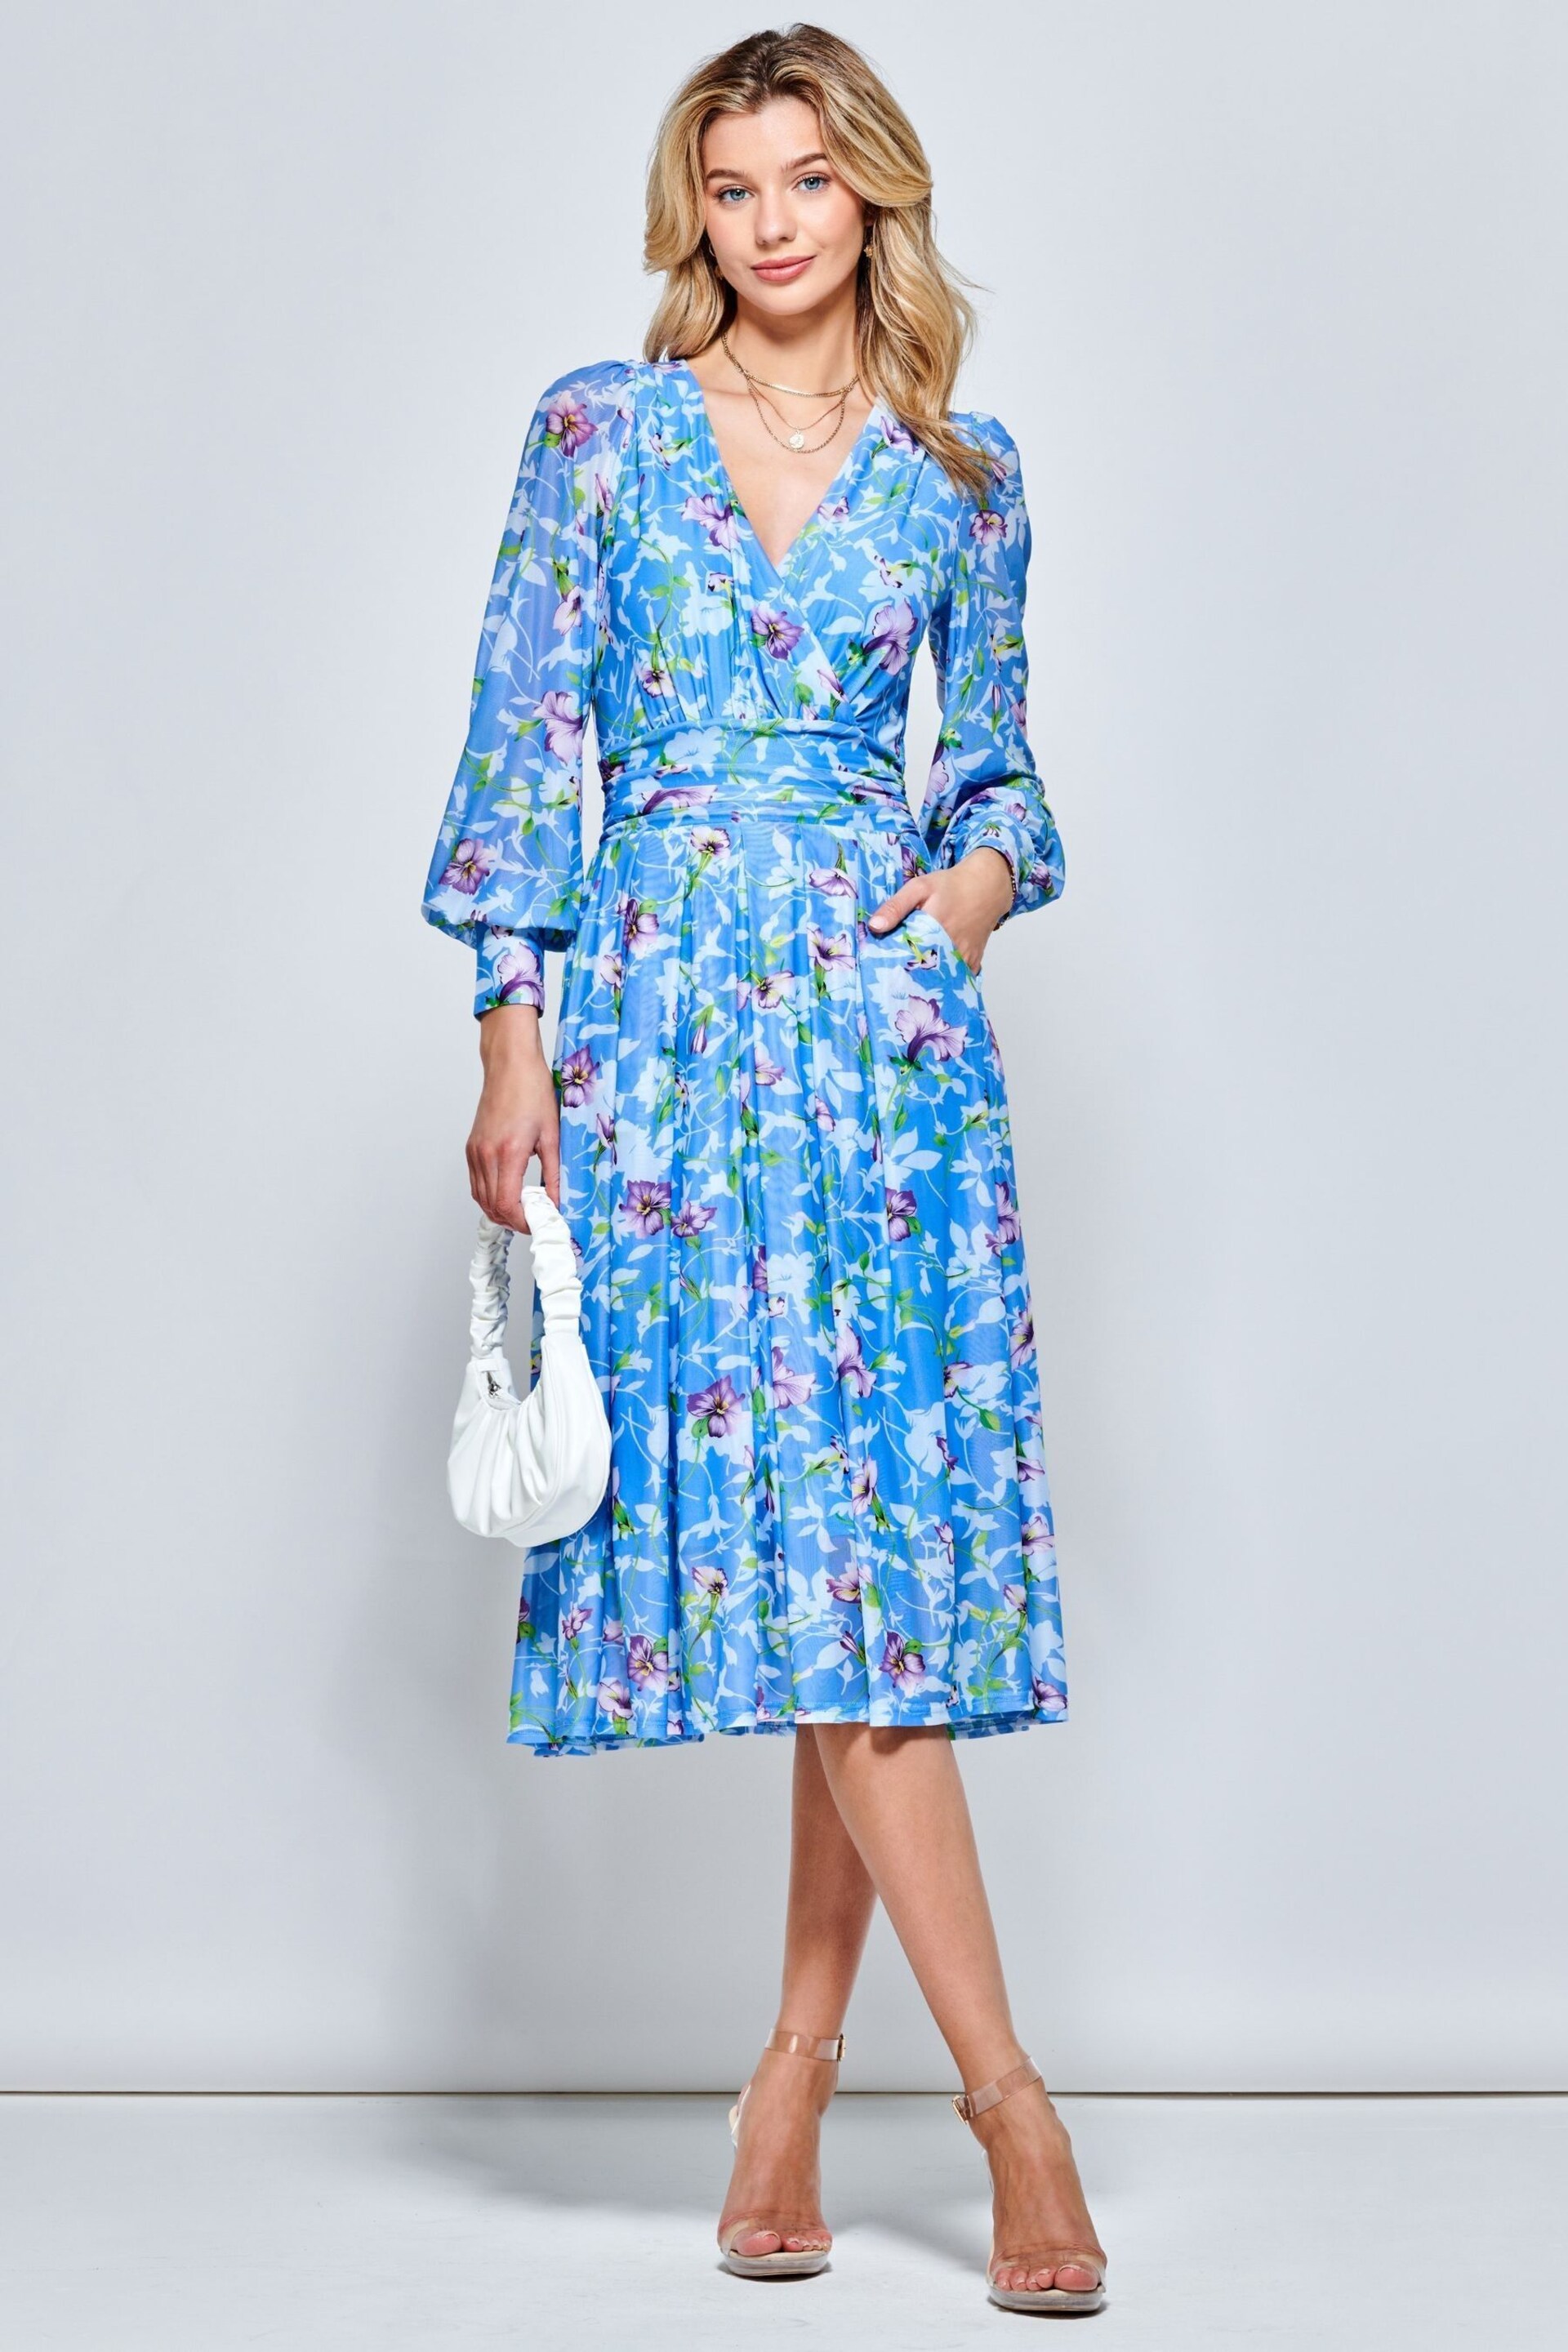 Jolie Moi Light Blue Floral Long Sleeve Mesh Midi Dress - Image 4 of 5